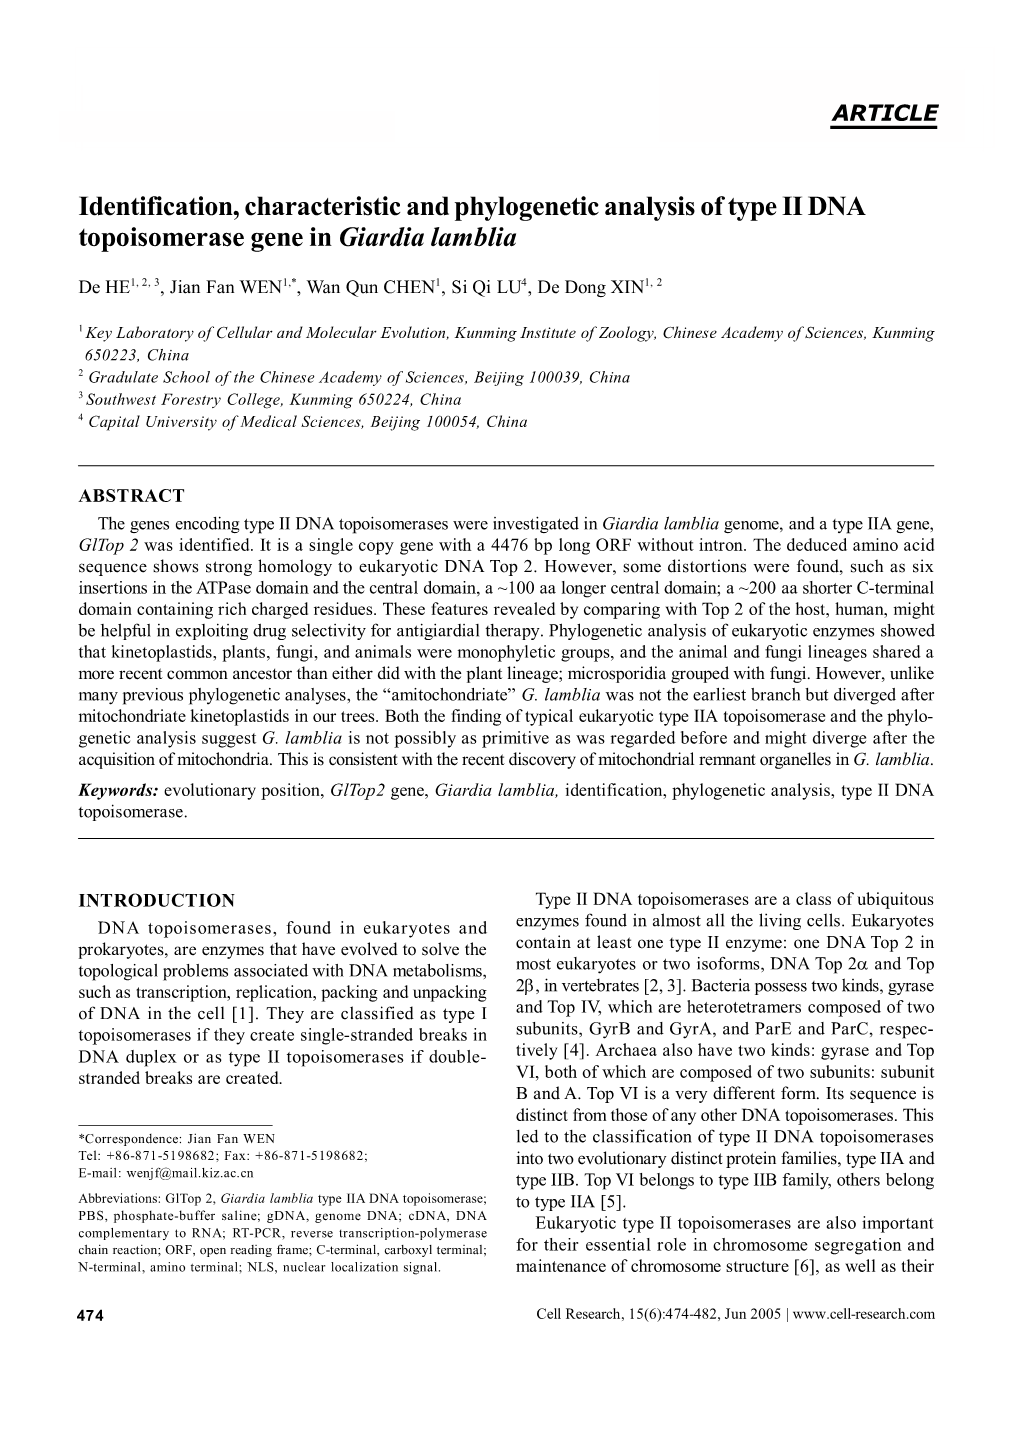 Identification, Characteristic and Phylogenetic Analysis of Type II DNA Topoisomerase Gene in Giardia Lamblia